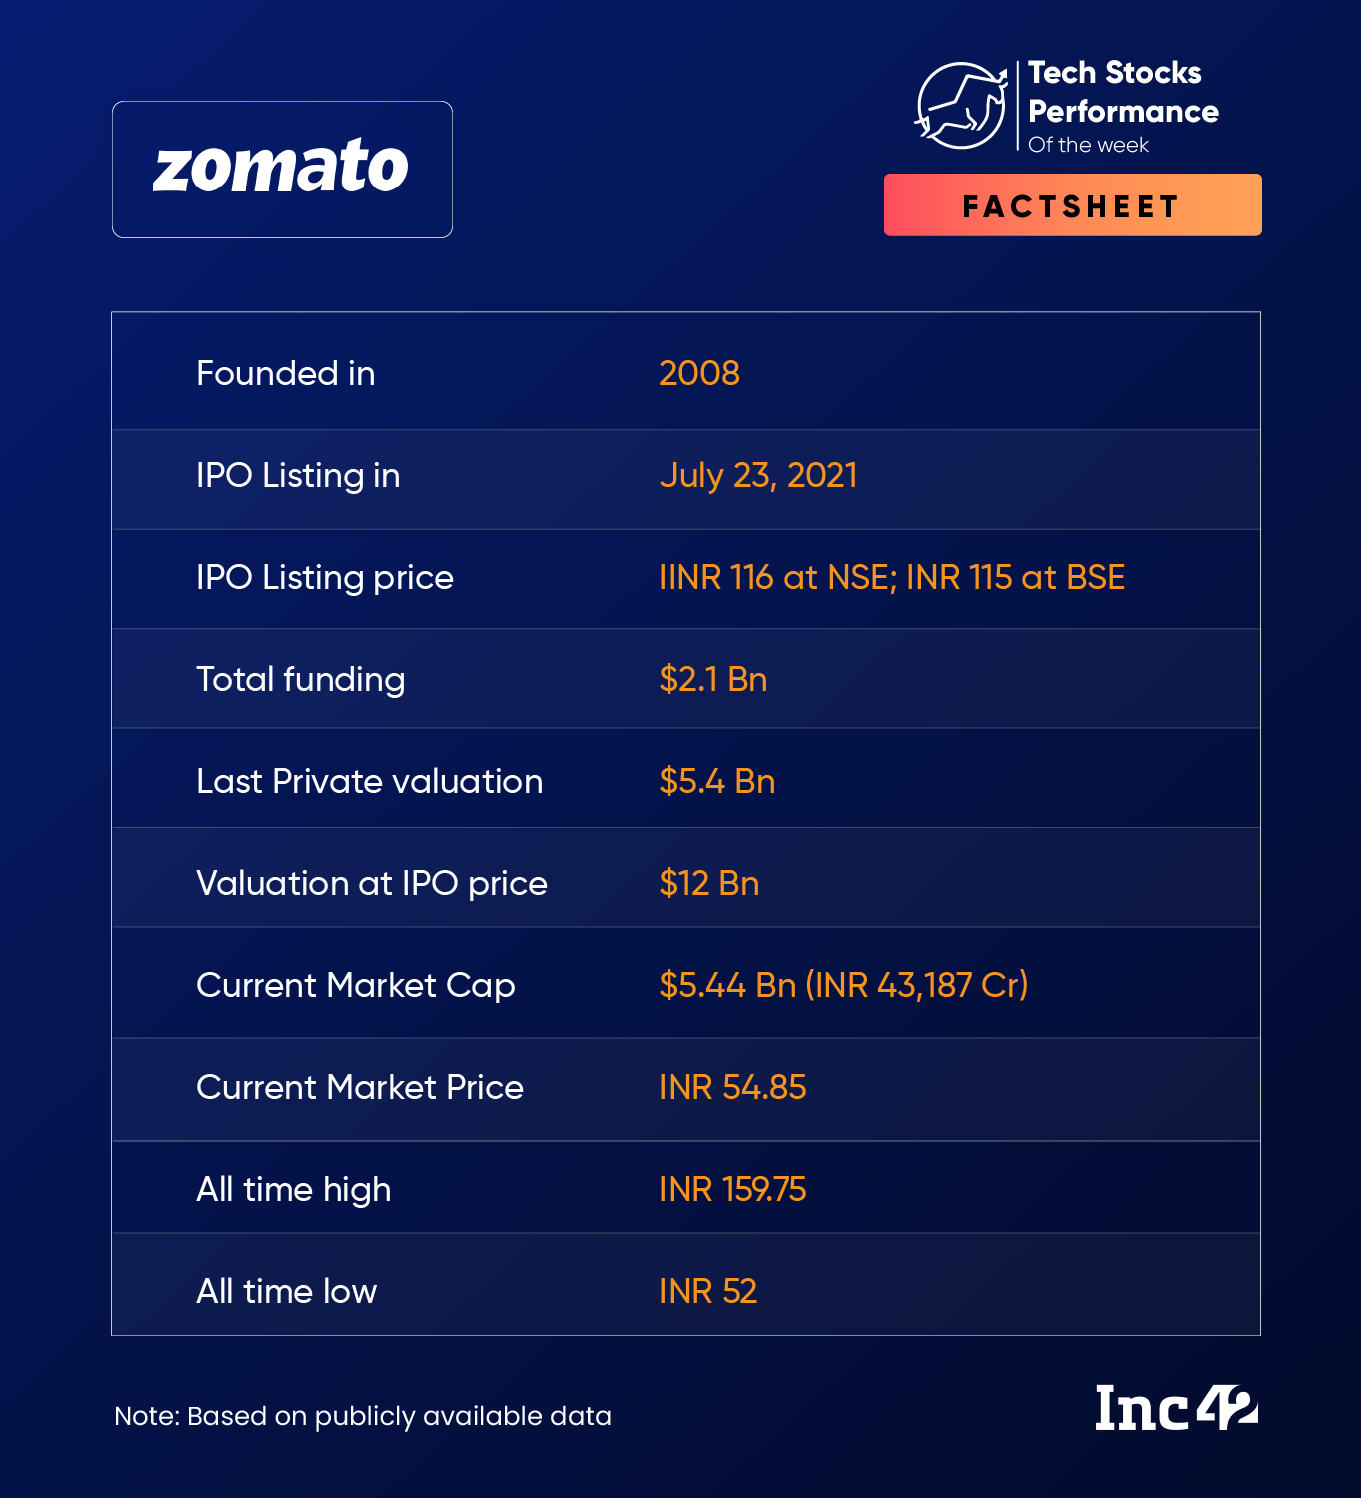 zomato stock market factsheet july 4 - 8